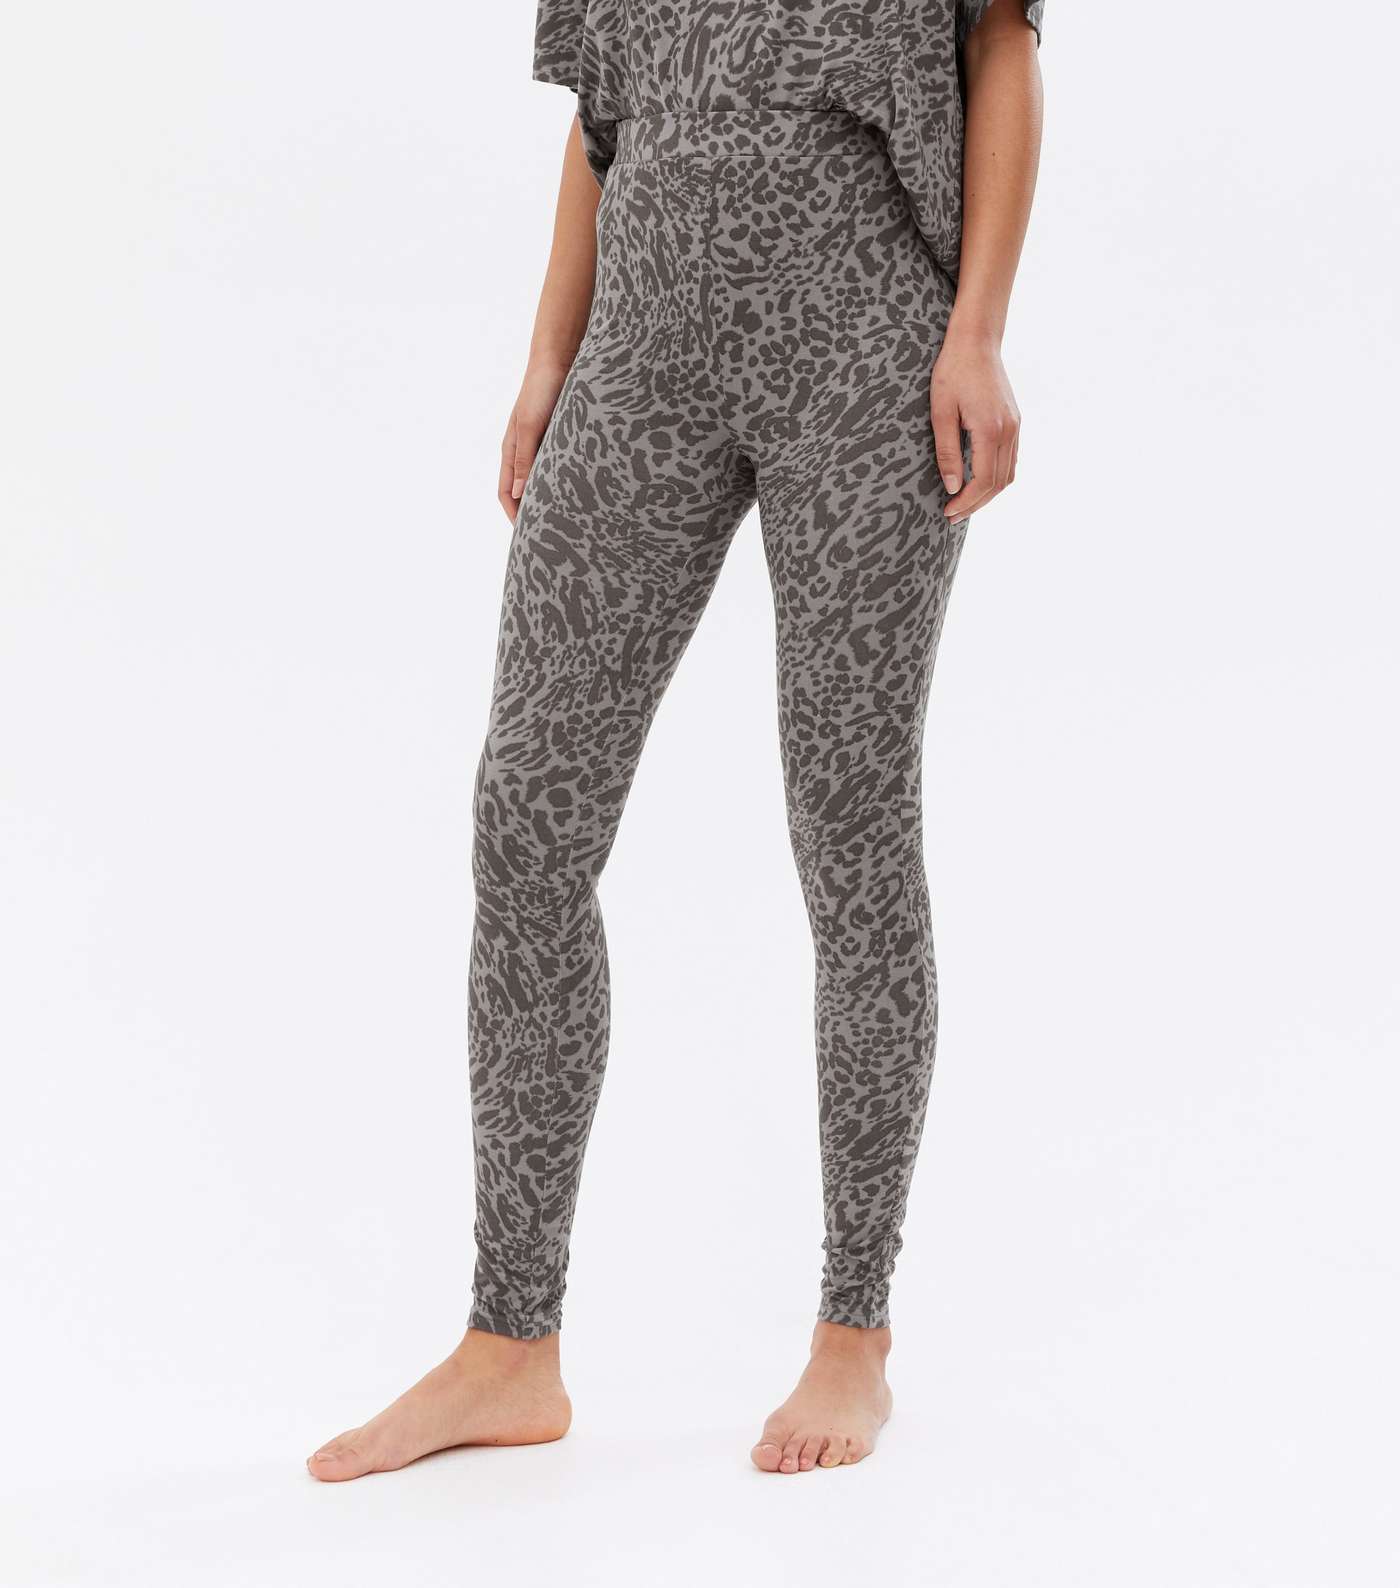 Tall Grey Soft Touch Legging Pyjama Set with Animal Print Image 3